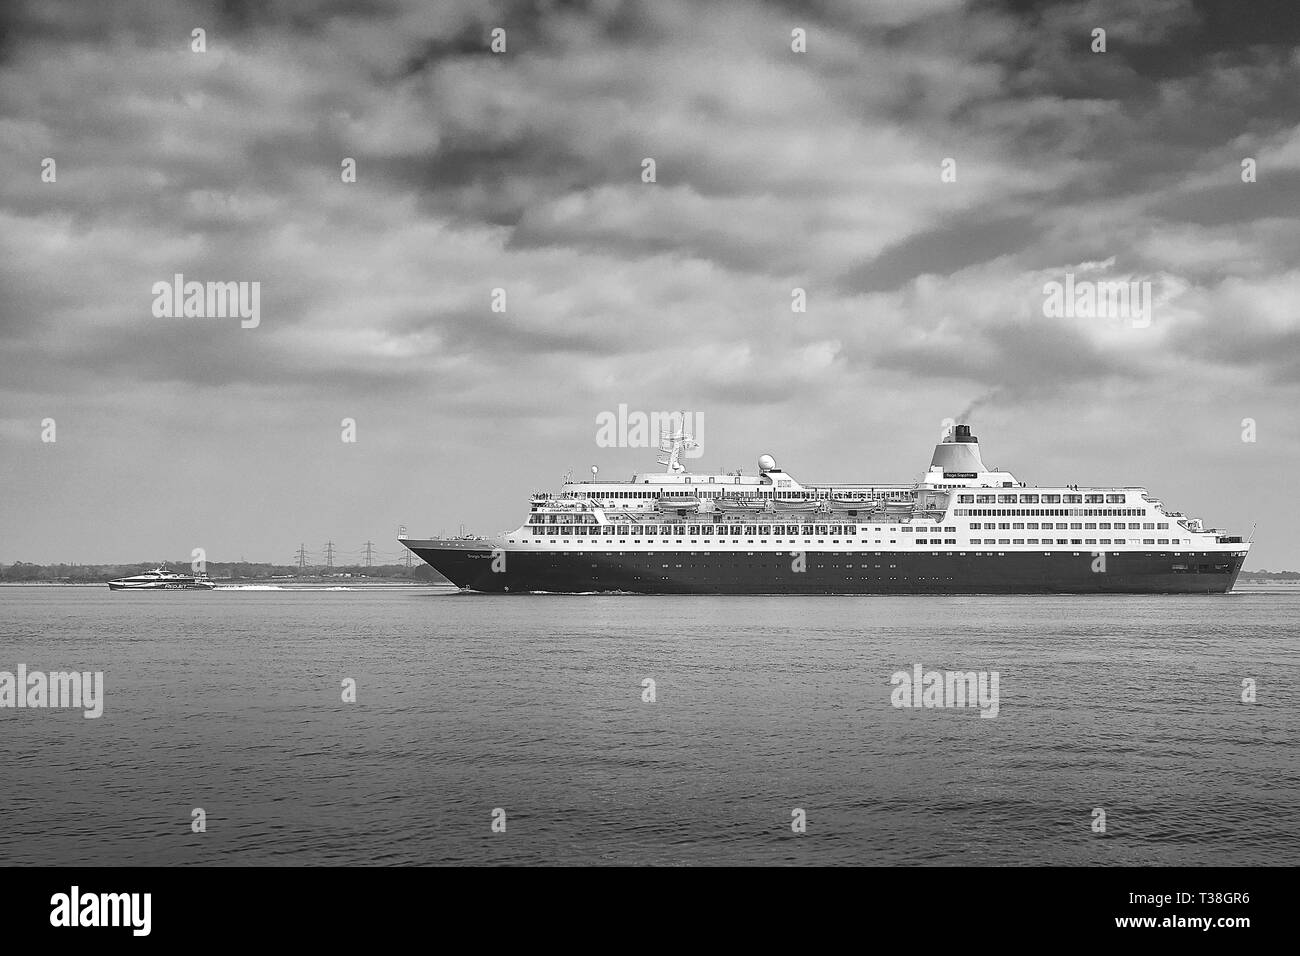 Black And White Photo Of The Saga Cruises (Saga Shipping), Cruise Ship, Saga Sapphire, Approaches The Port Of Southampton. A Fast Ferry Passes Ahead. Stock Photo